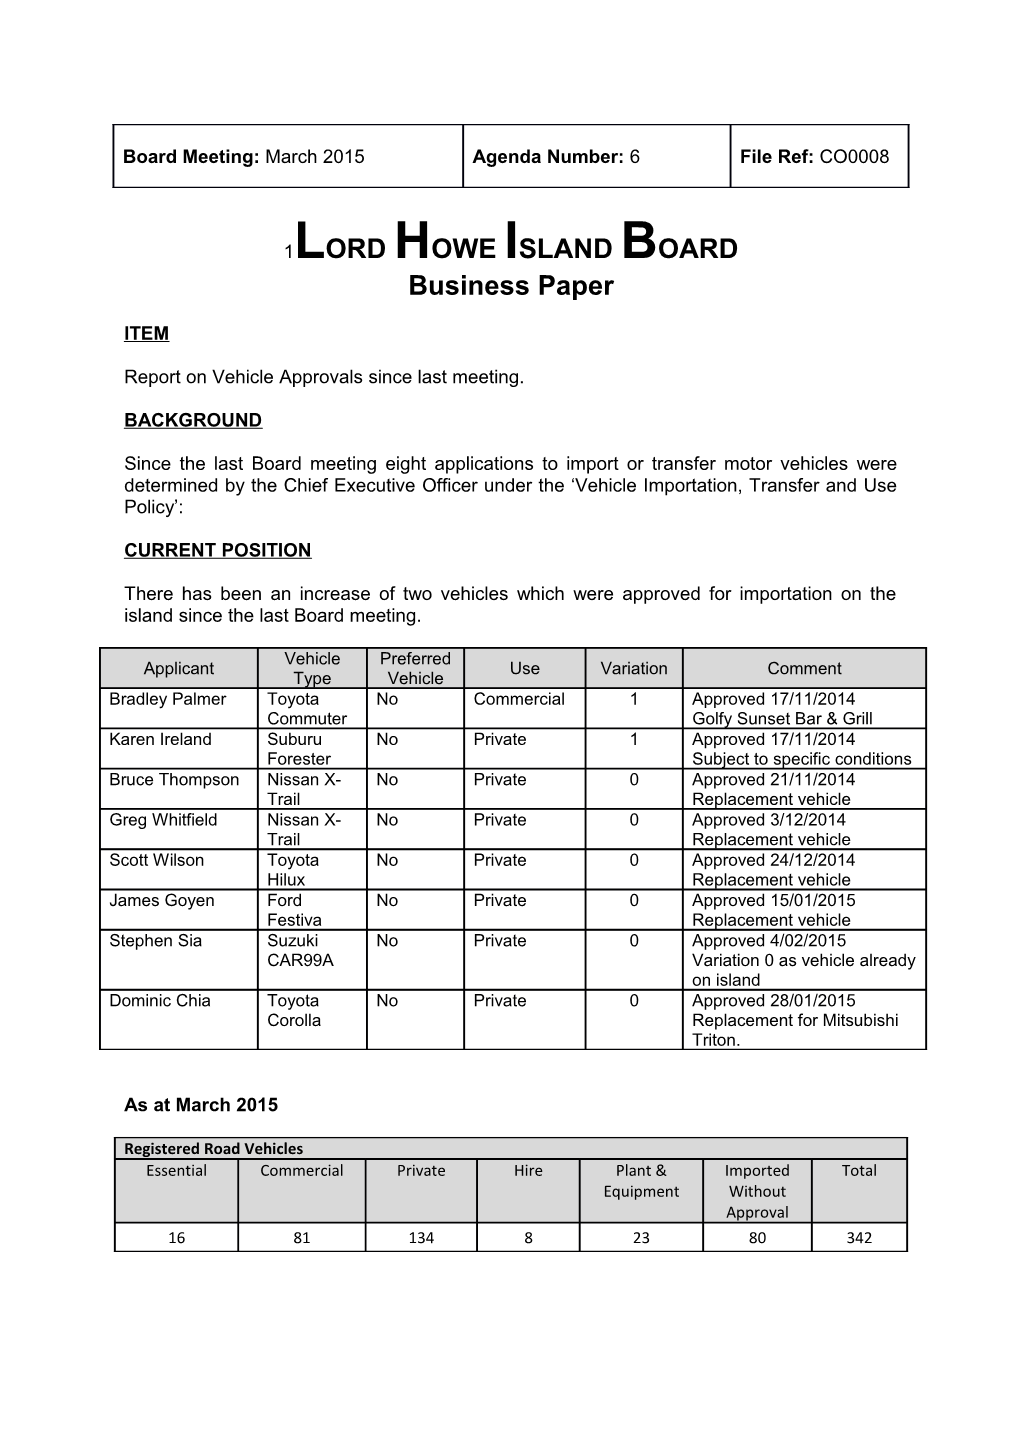 Lord Howe Island Board s1